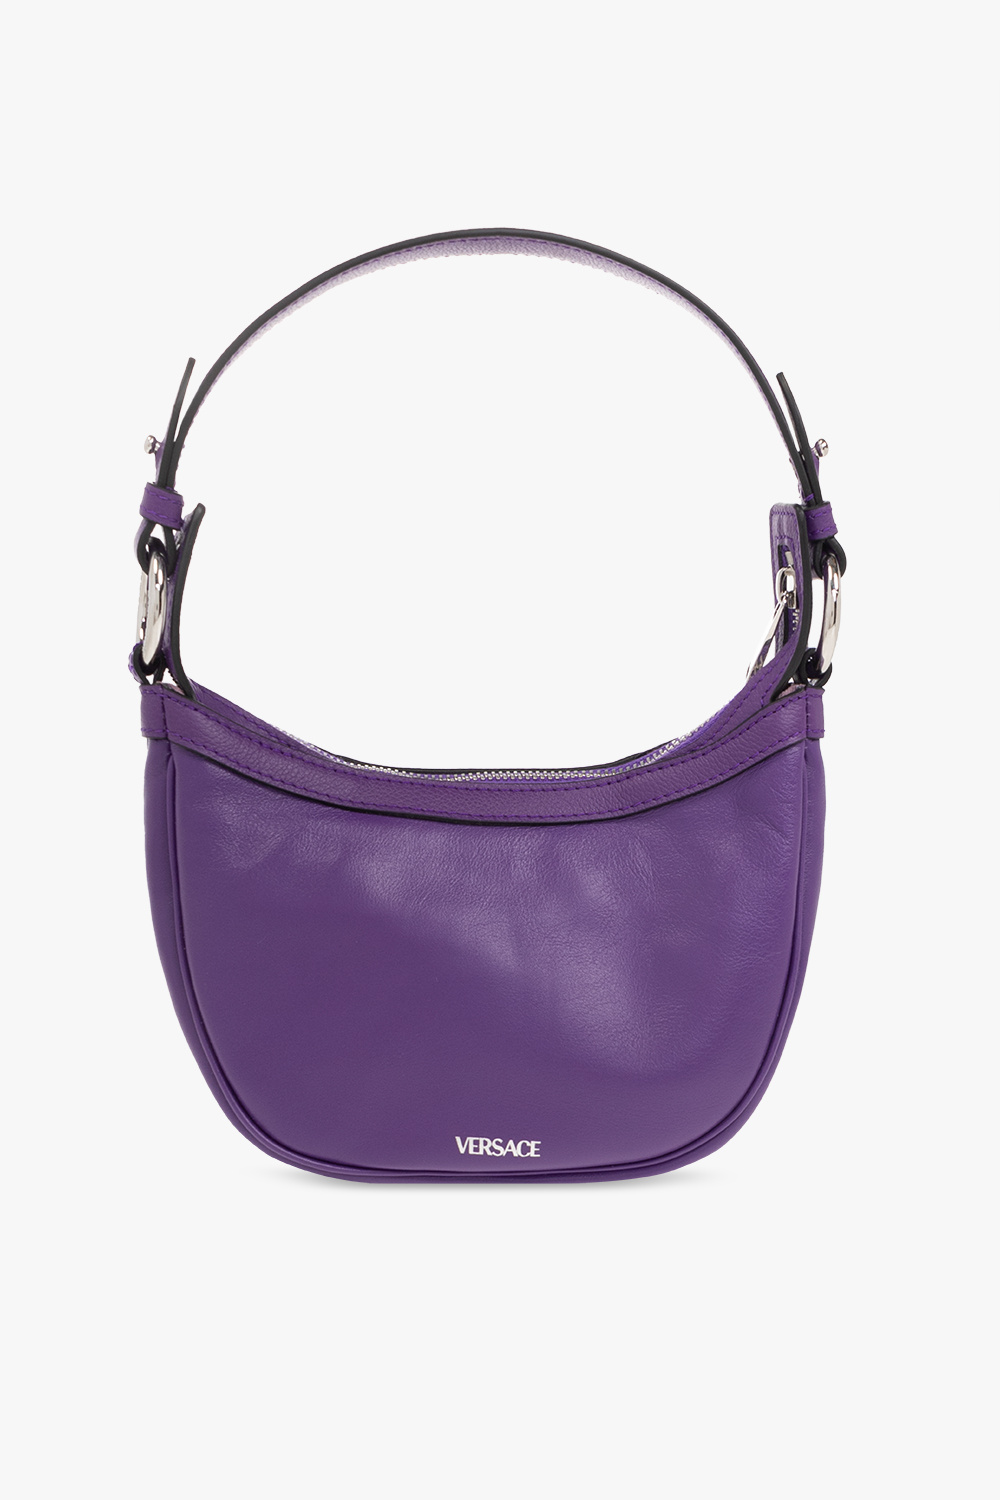 Versace 'Hobo Mini' shoulder Carhartt bag